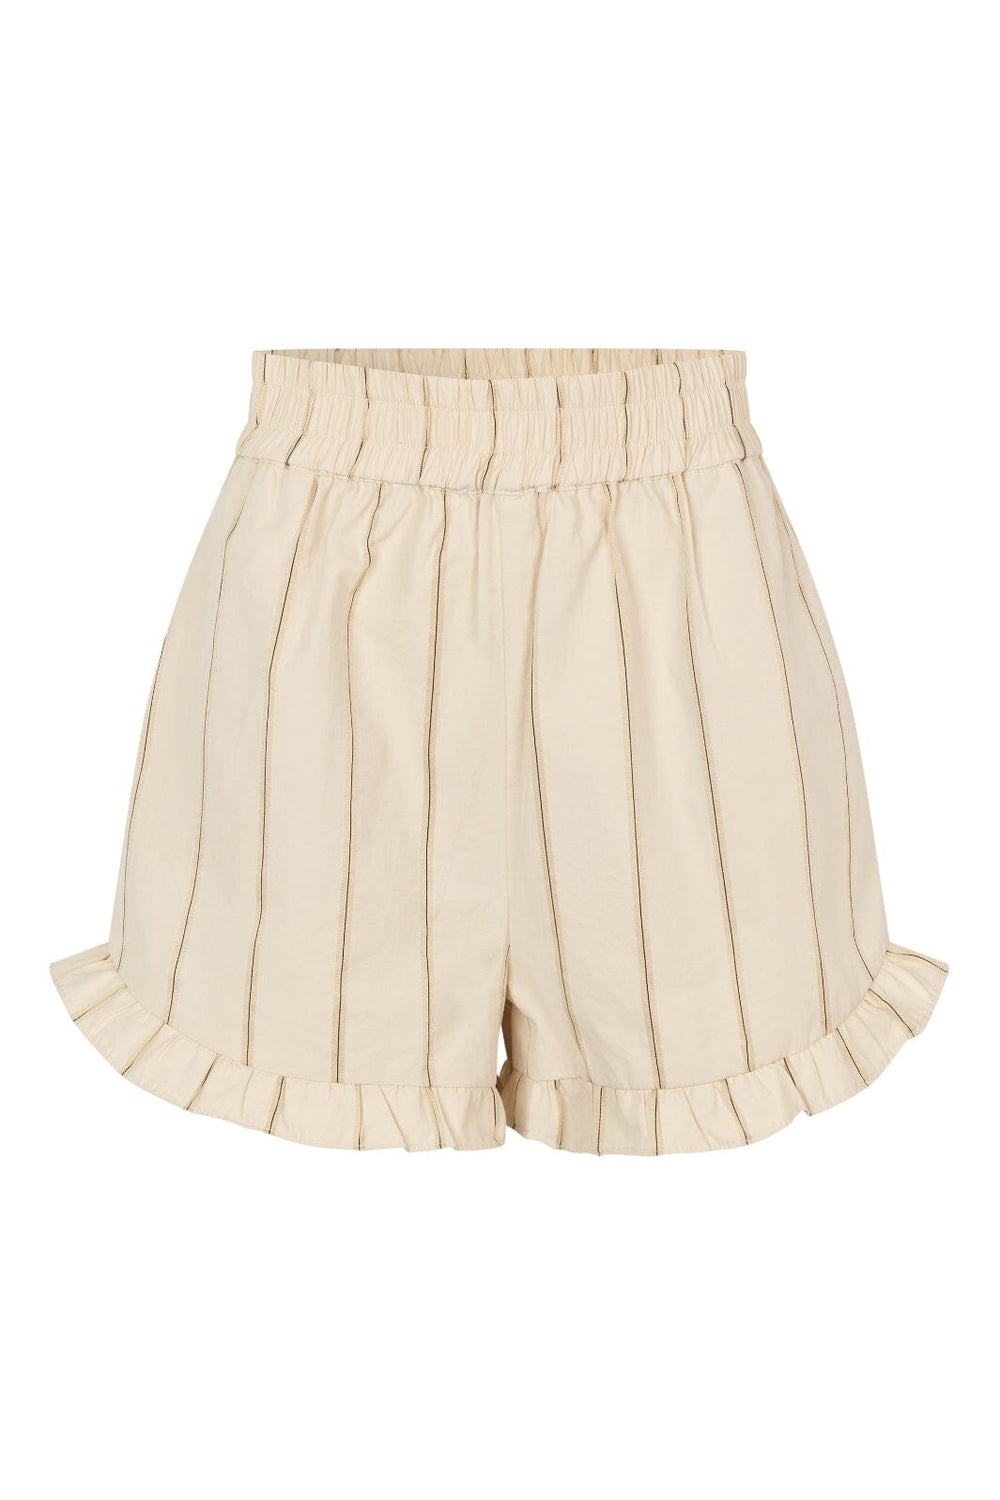 A-View - Lizza Shorts - 139 Off White/Black Stripe Shorts 